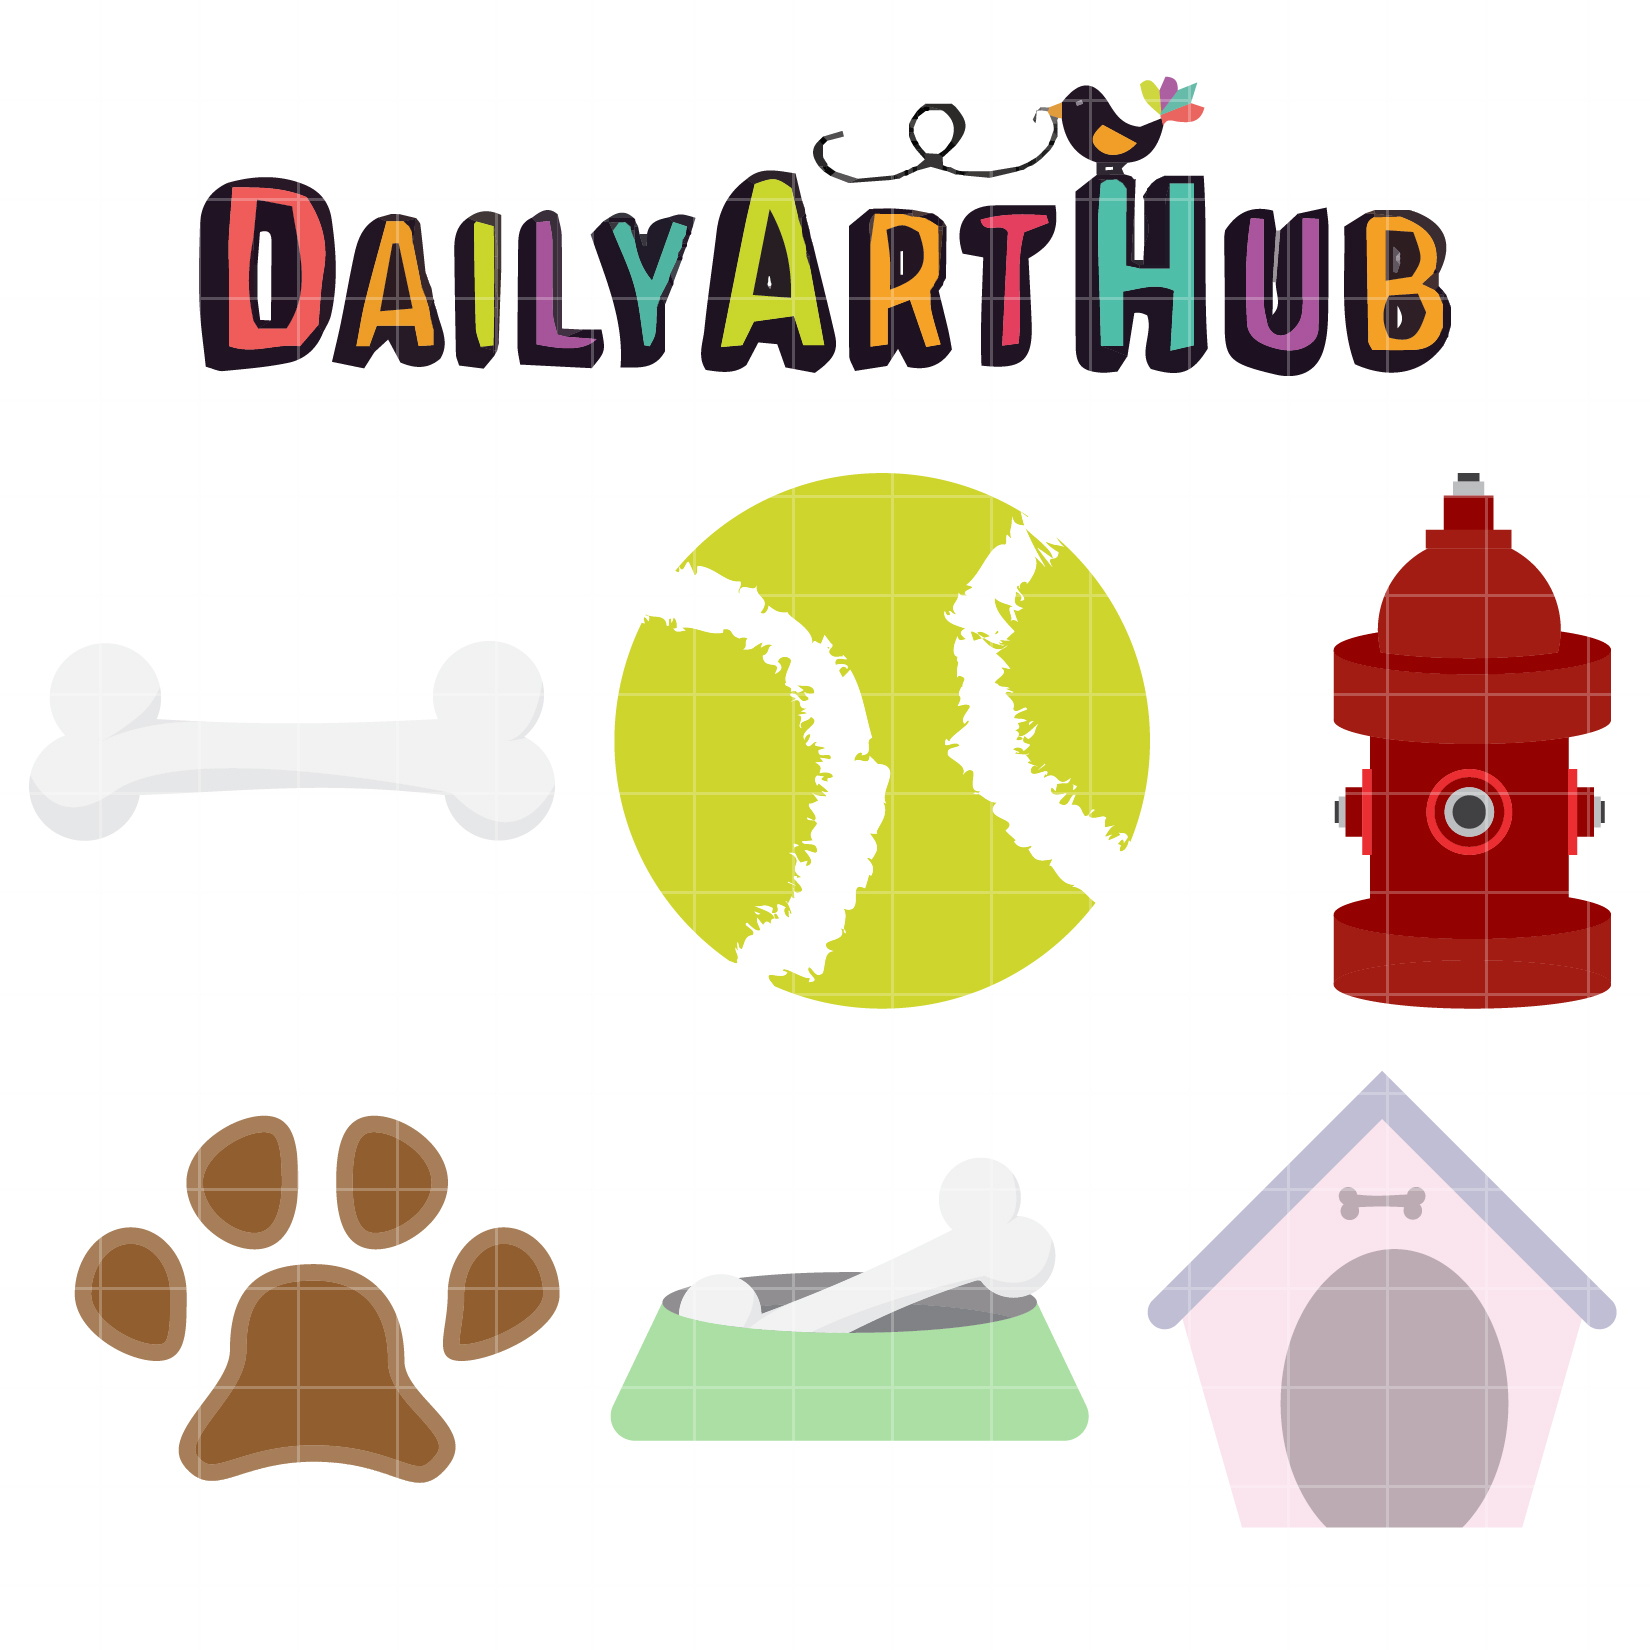 Dog Tag Shapes Clip Art Set – Daily Art Hub // Graphics, Alphabets